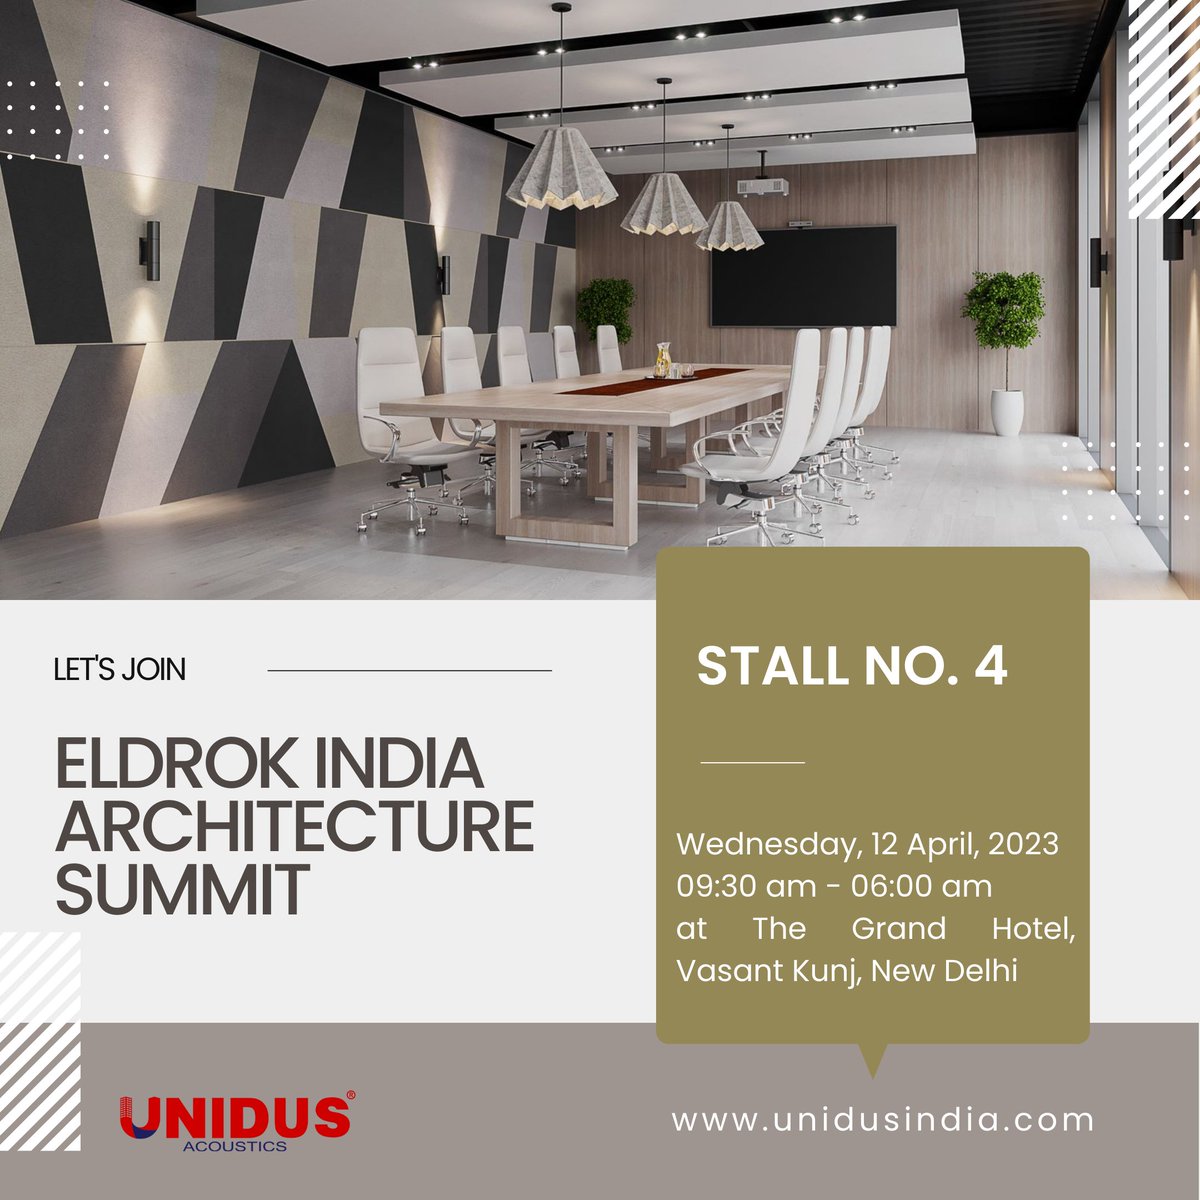 We Welcome  𝐔𝐧𝐢𝐝𝐮𝐬 as '𝐓𝐡𝐞 𝐁𝐫𝐨𝐧𝐳𝐞 𝐒𝐩𝐨𝐧𝐬𝐨𝐫' at Eldrok India Architecture Summit (EIAS) on 12th April 2023 at The Grand, Vasant Kunj, New Delhi. 

#acousticpanels #walldecor #soundinsulation #bespokeinteriors #featurewall #designwall #eldrok #conference